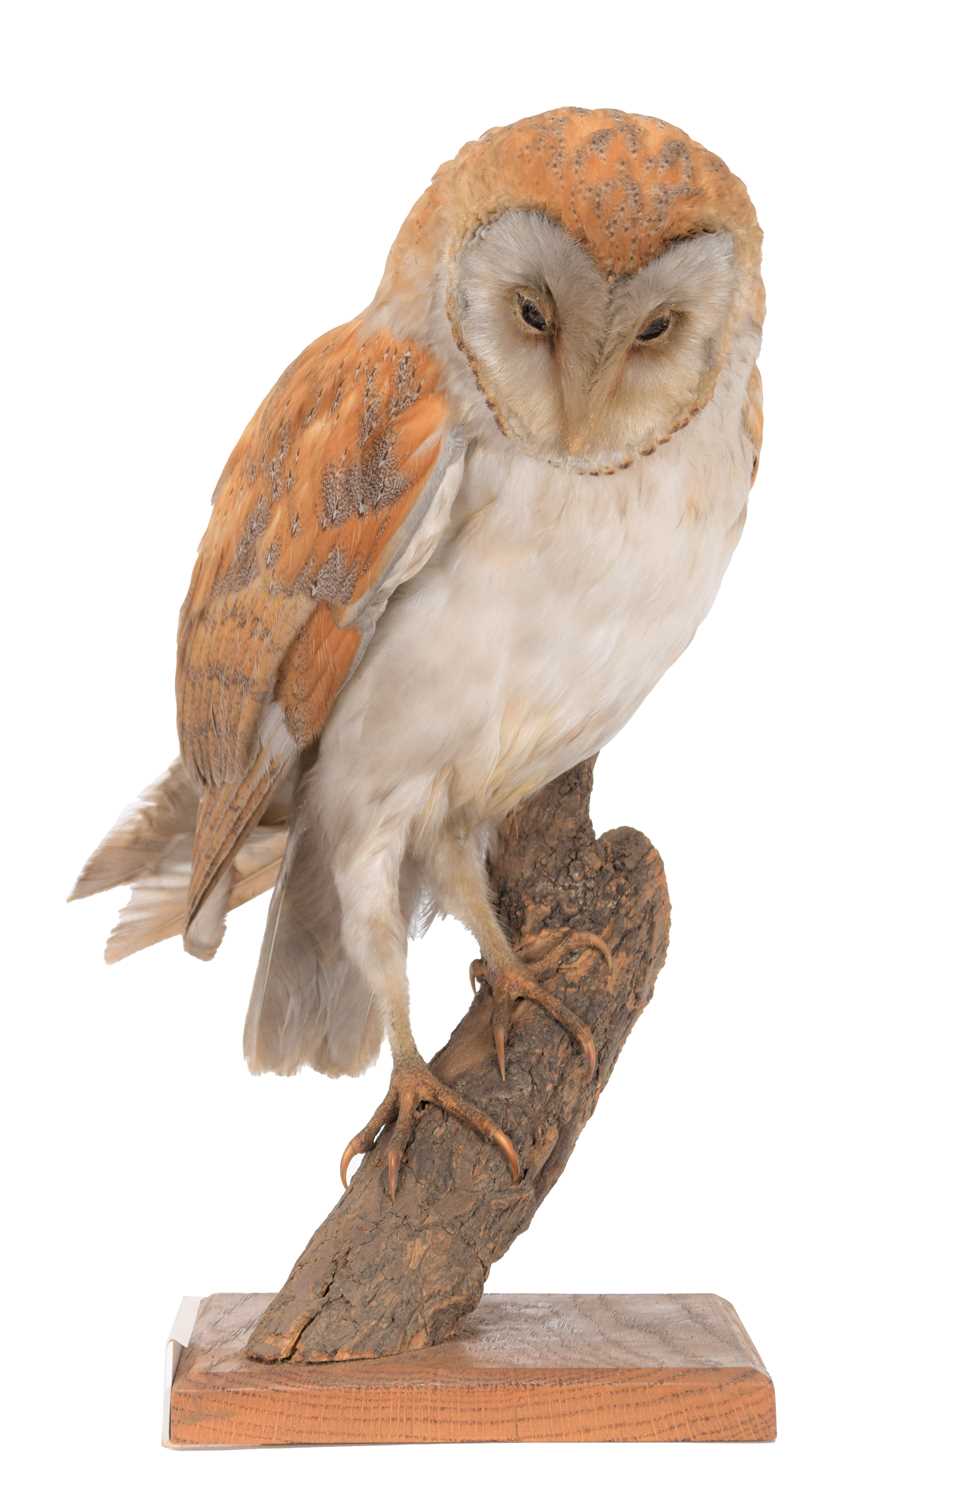 Lot 99 - Taxidermy: An Early 20th Century Barn Owl...